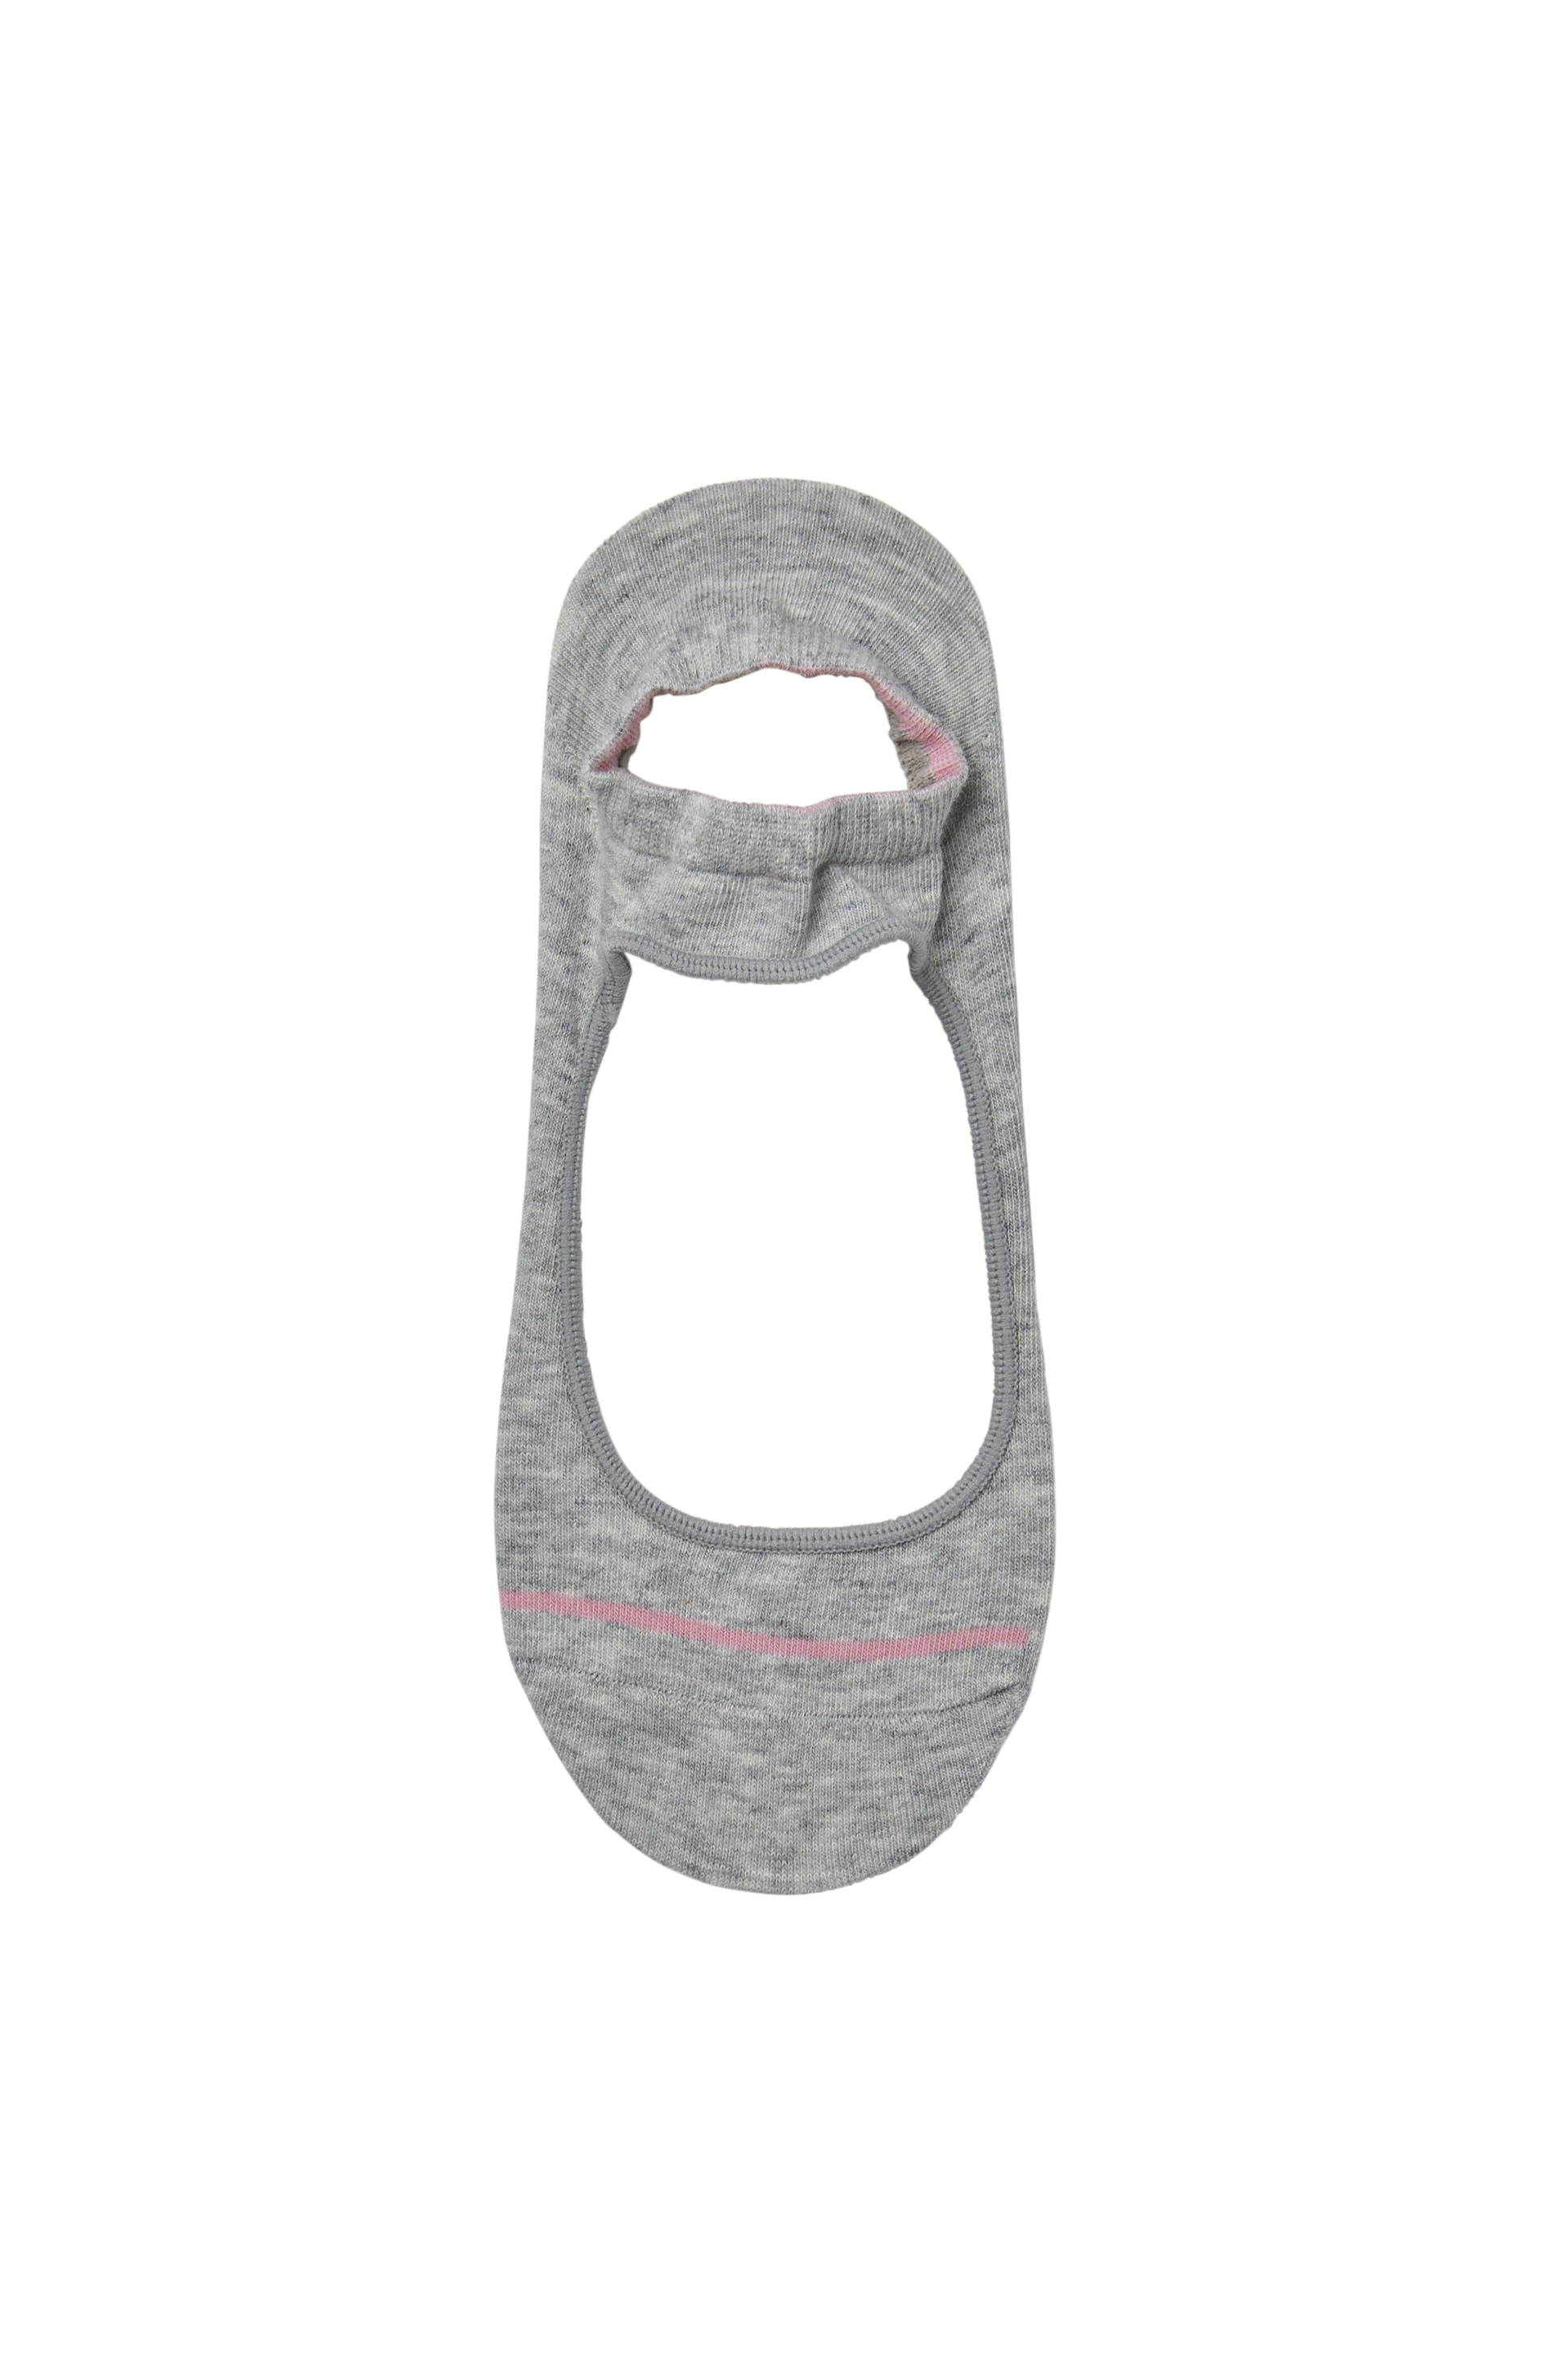 Top of Simon de Winter Women's Cotton Yoga Socks in Light Grey Marle